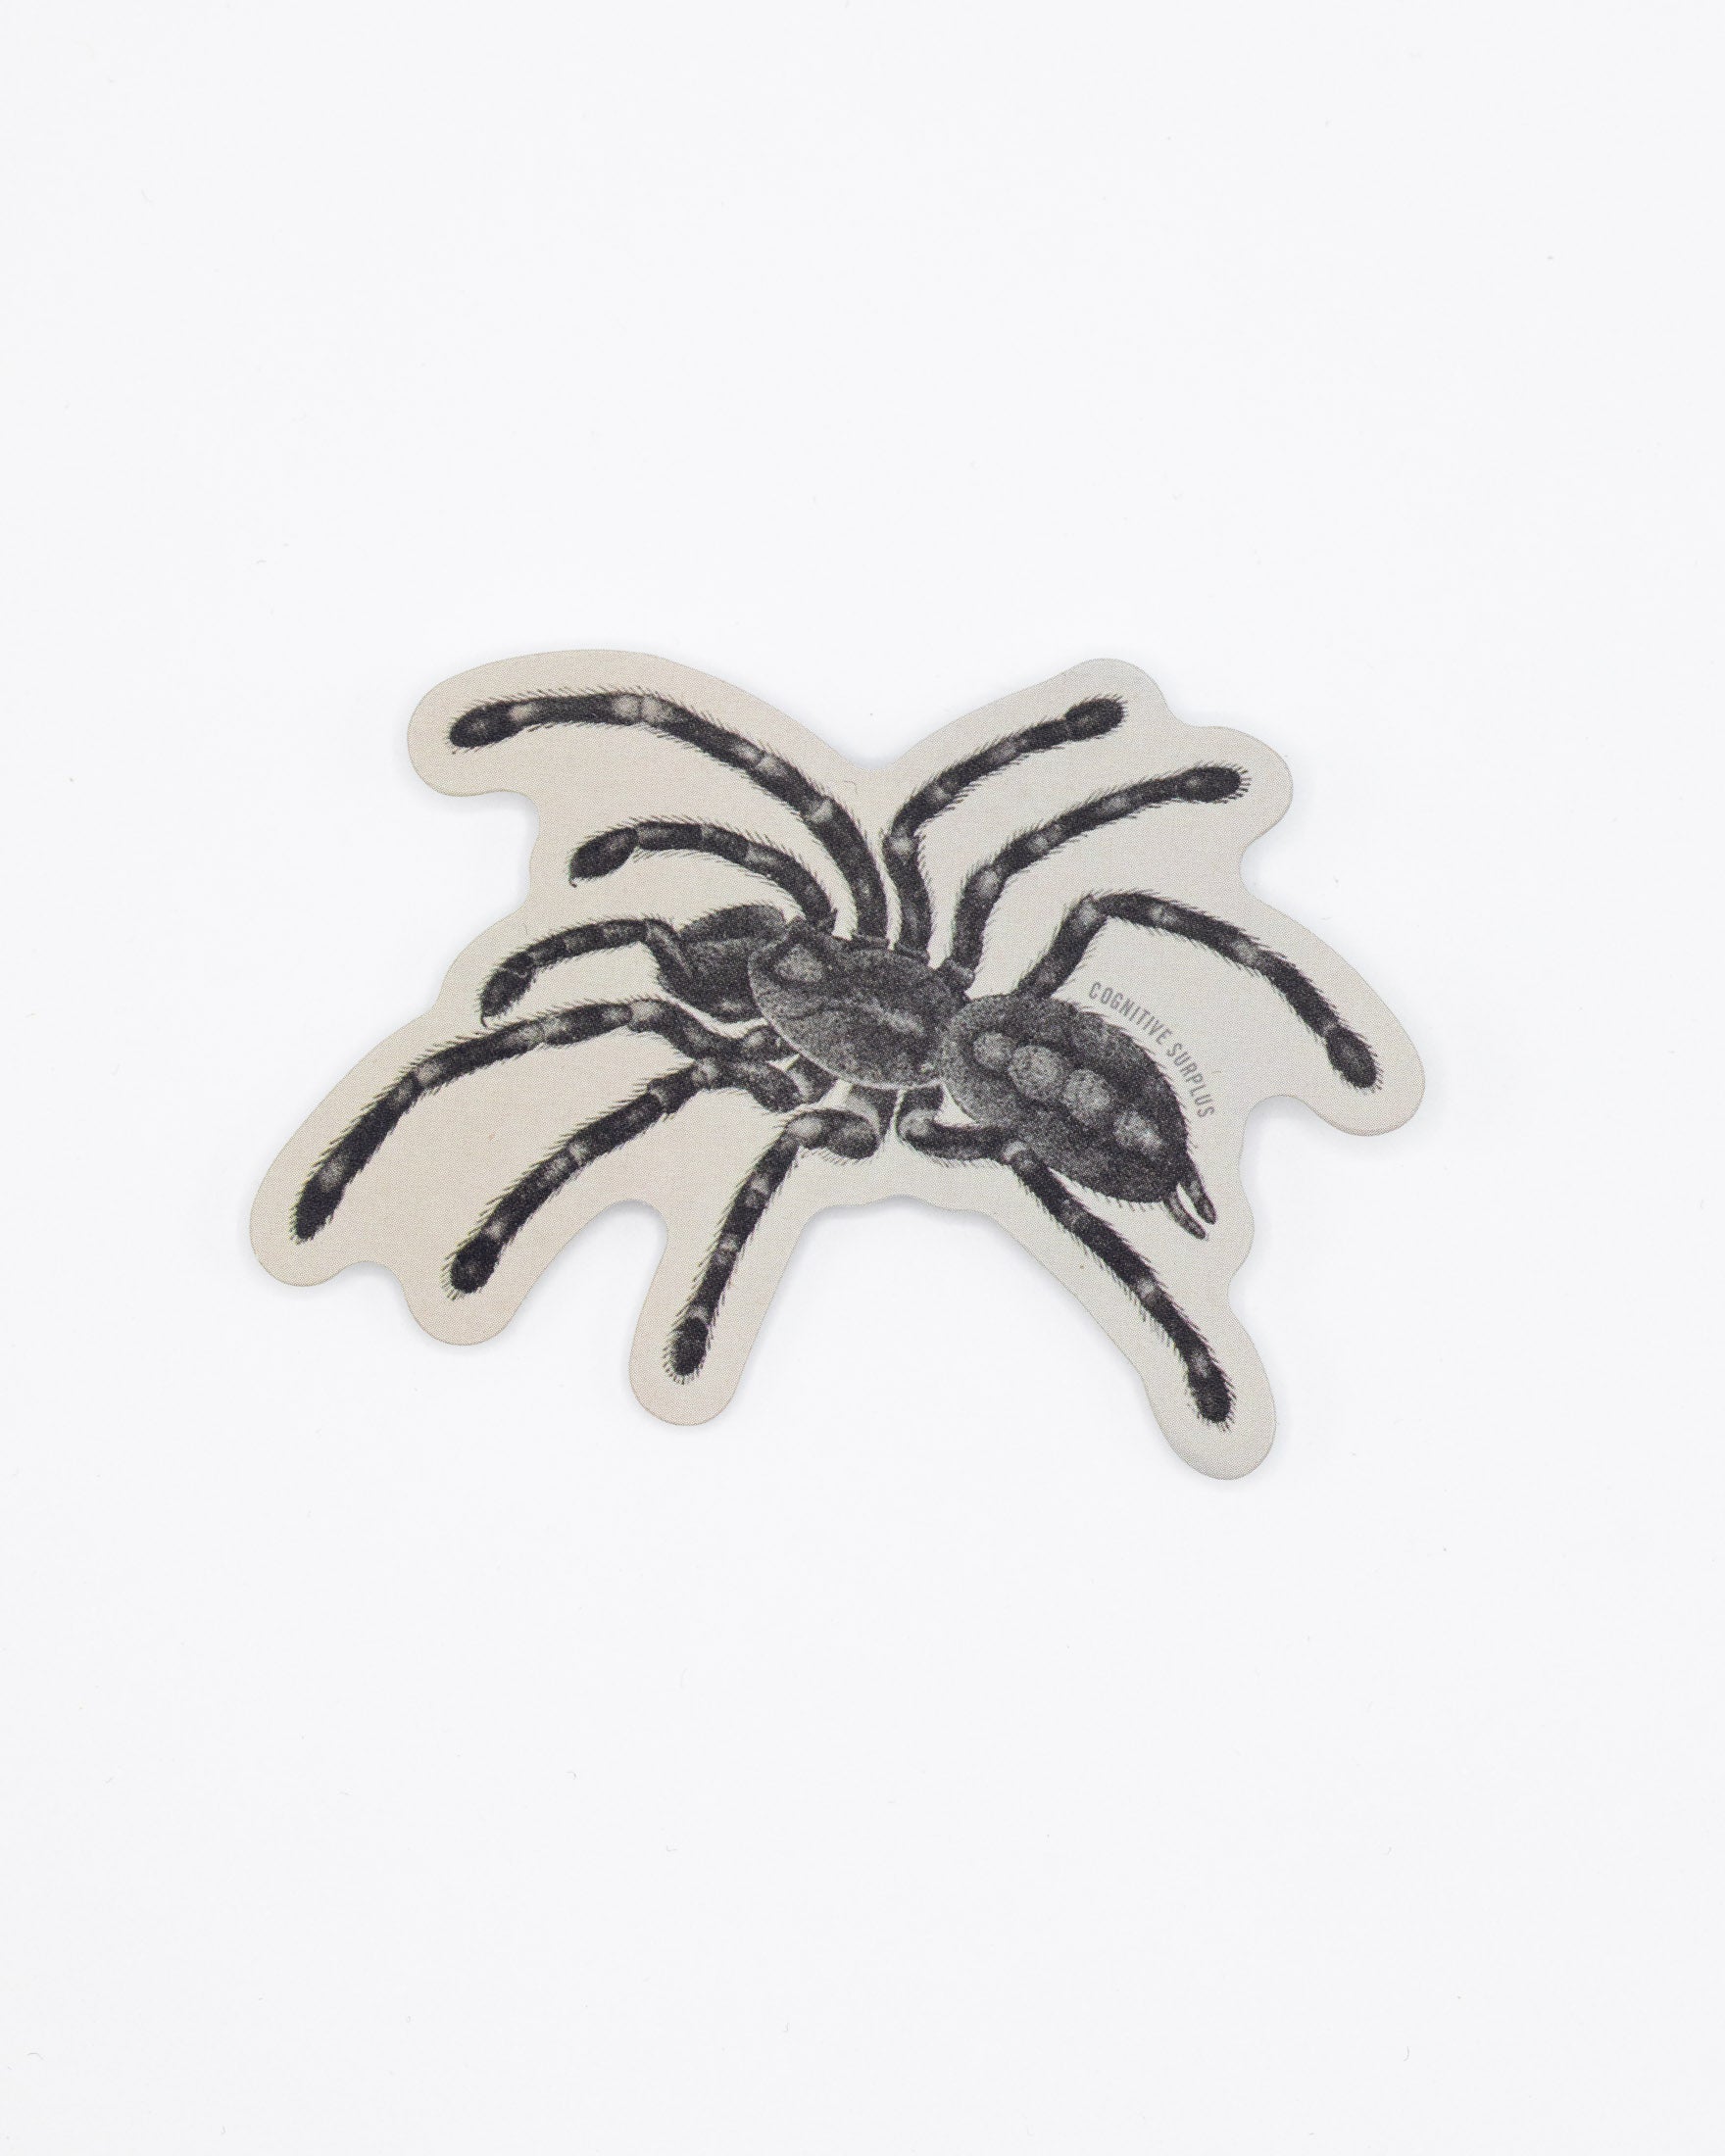 Tarantula Spider Sticker